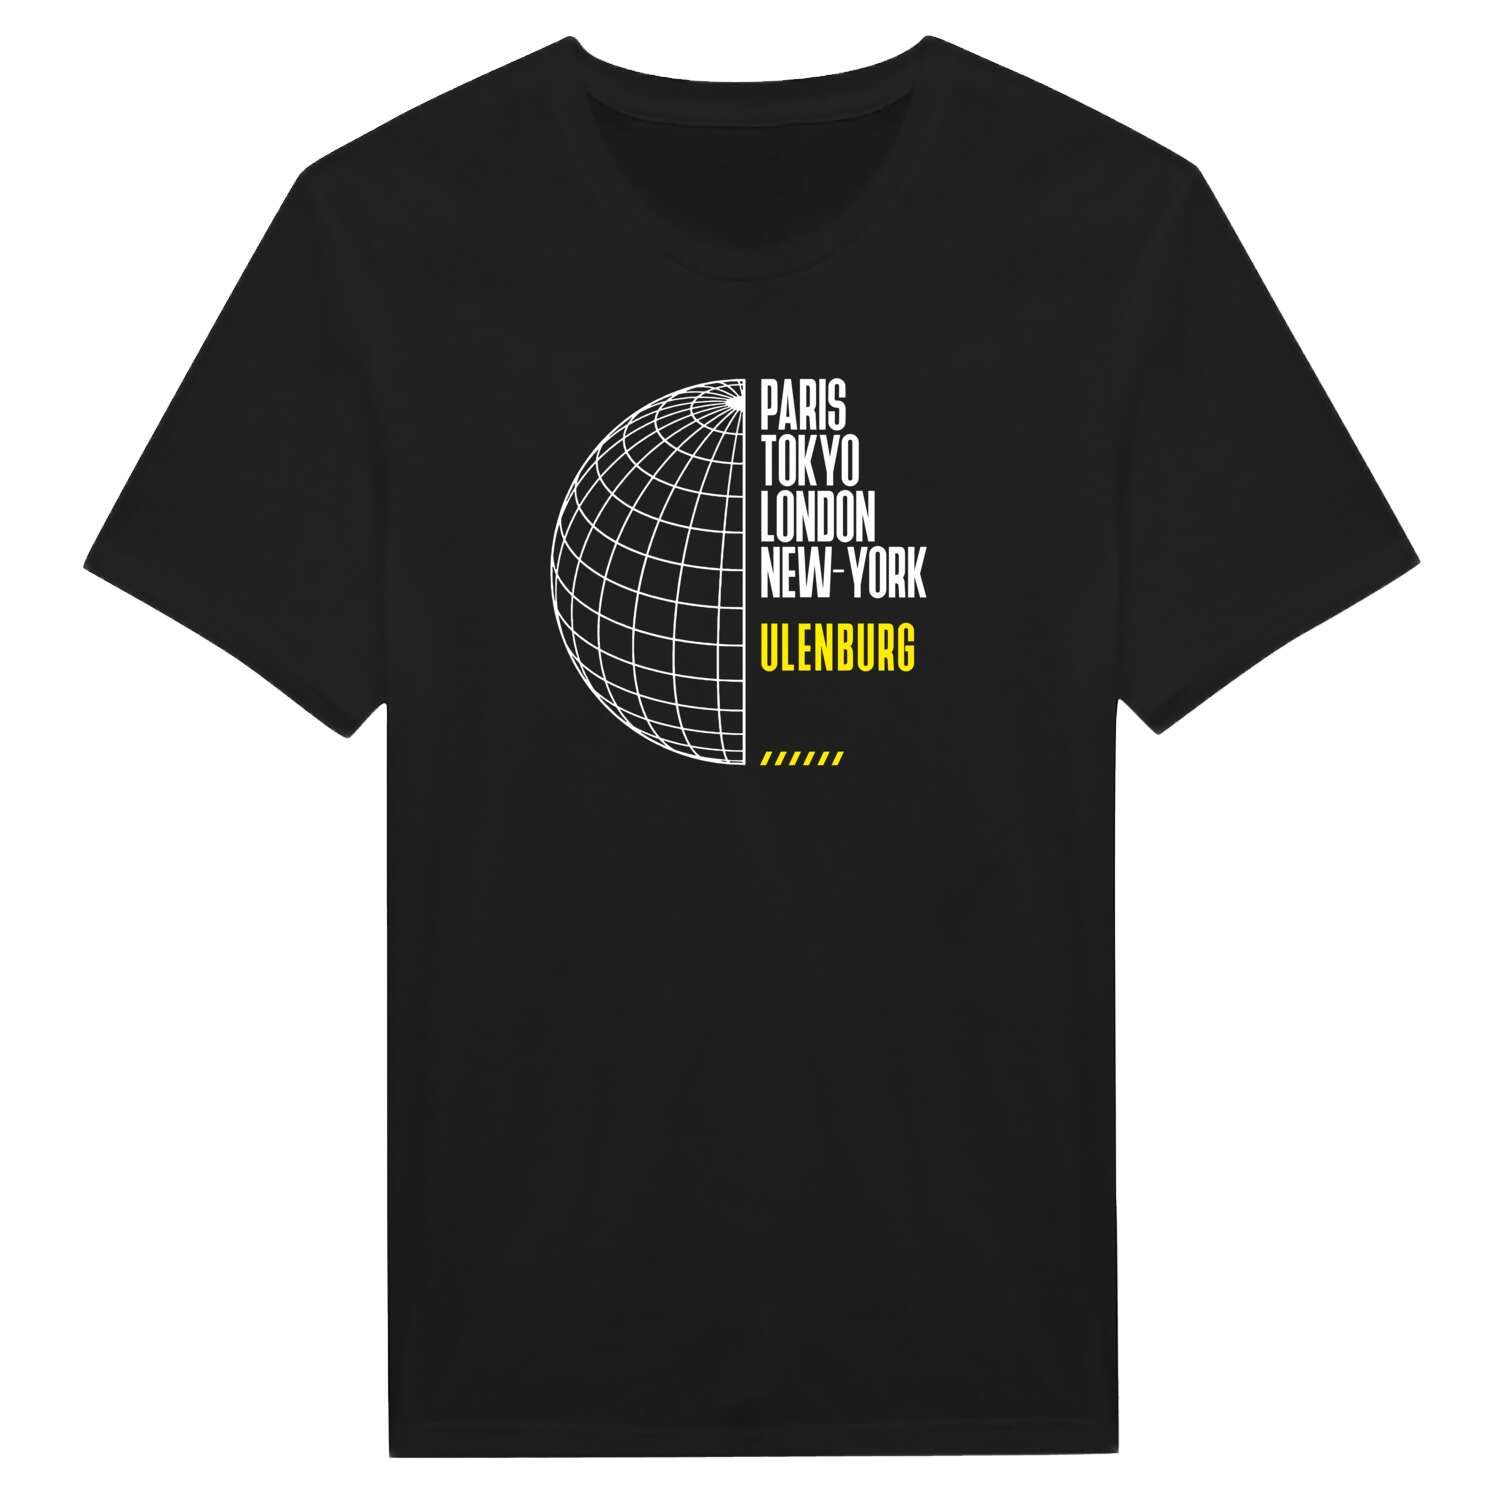 Ulenburg T-Shirt »Paris Tokyo London«